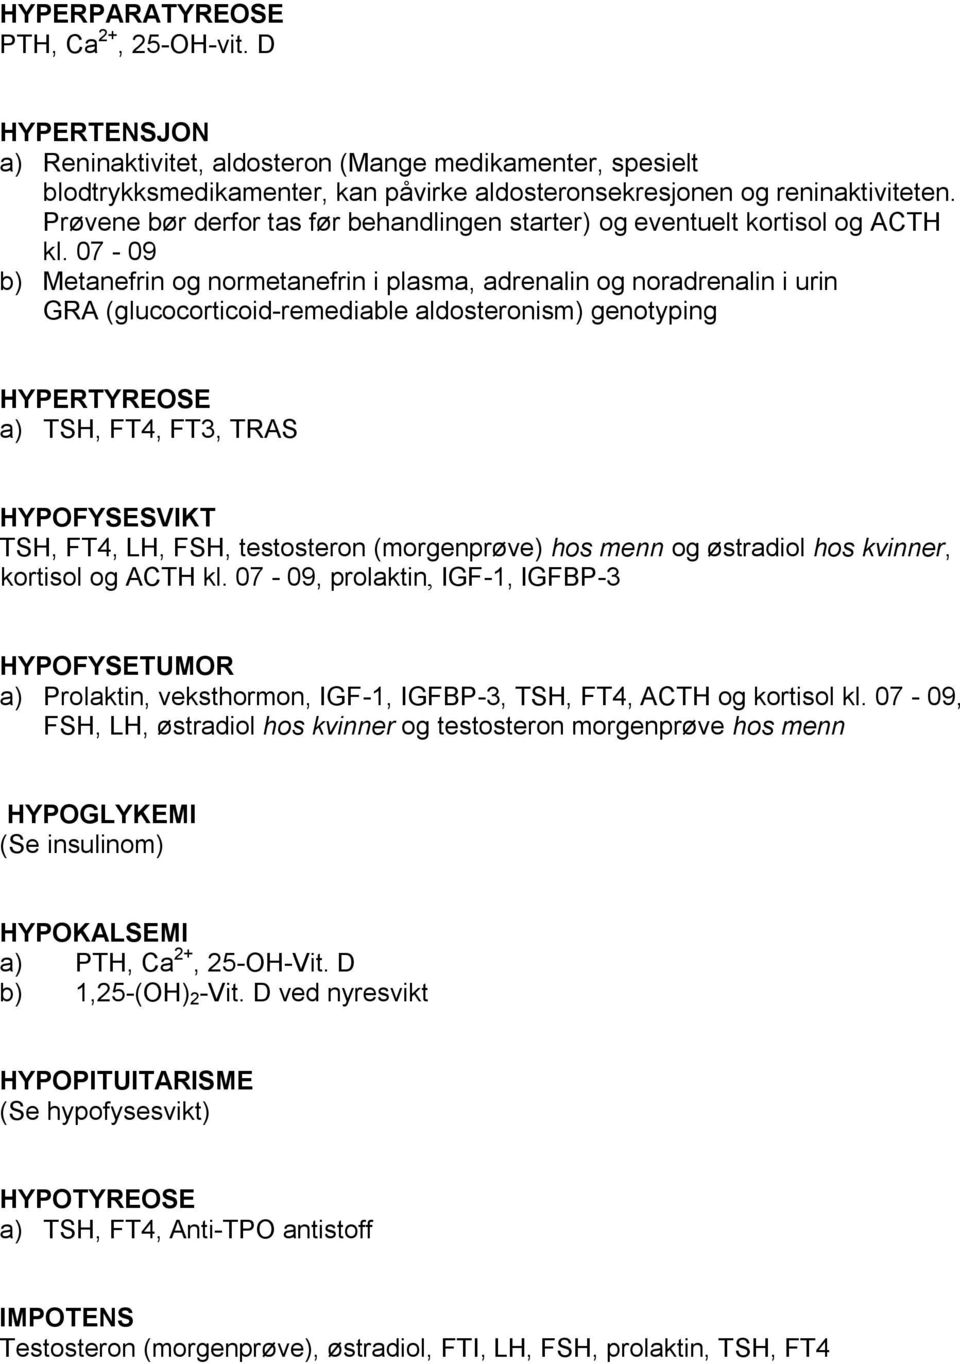 07-09 b) Metanefrin og normetanefrin i plasma, adrenalin og noradrenalin i urin GRA (glucocorticoid-remediable aldosteronism) genotyping HYPERTYREOSE a) TSH, FT4, FT3, TRAS HYPOFYSESVIKT TSH, FT4,